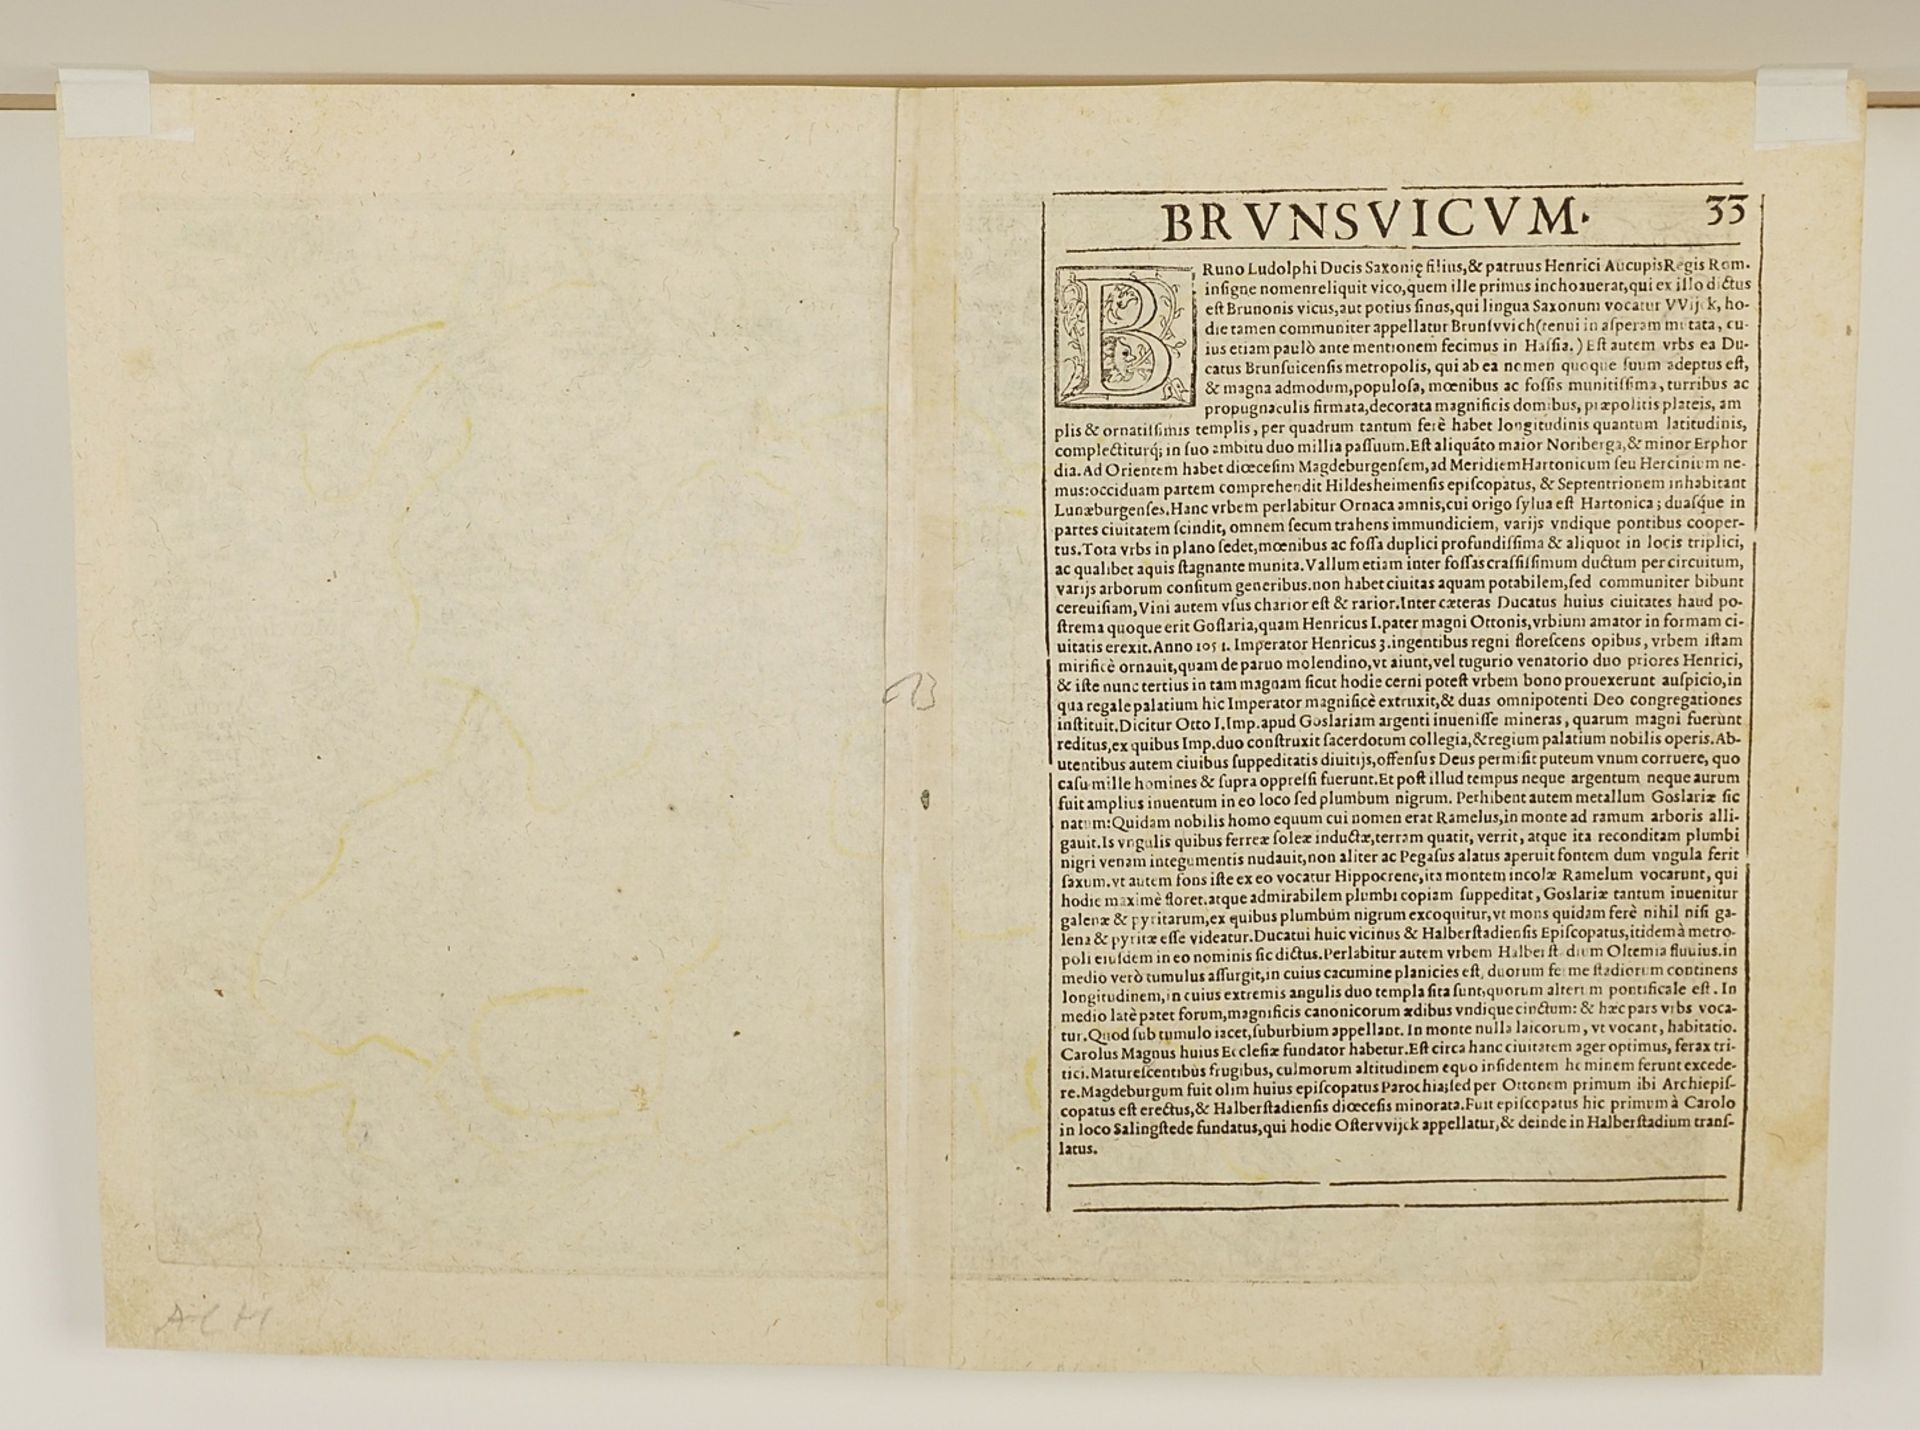 Mat(t)hias Quad (1557-1613), "Braunswick ducatus […]" (Map of Brunswick, Hildesheim and Halberstadt) - Image 4 of 4